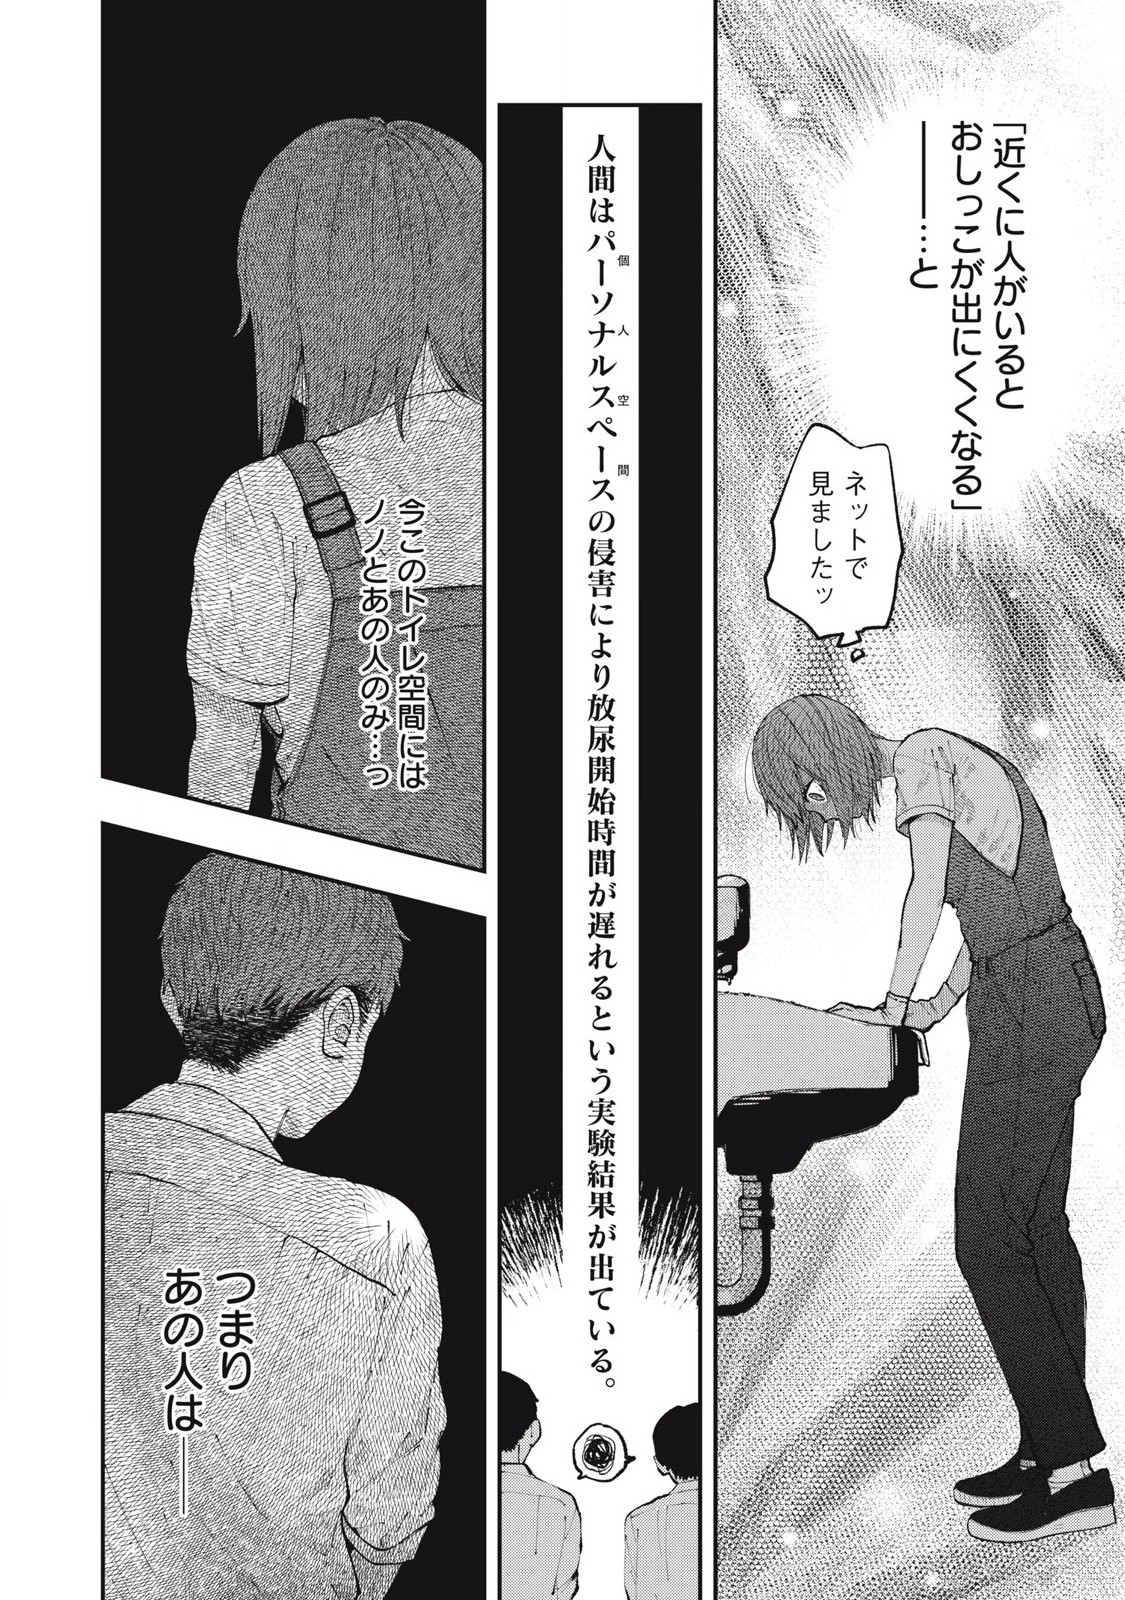 Seisouin Nono-chan Kyou no Tsubuyaki - Chapter 3 - Page 8